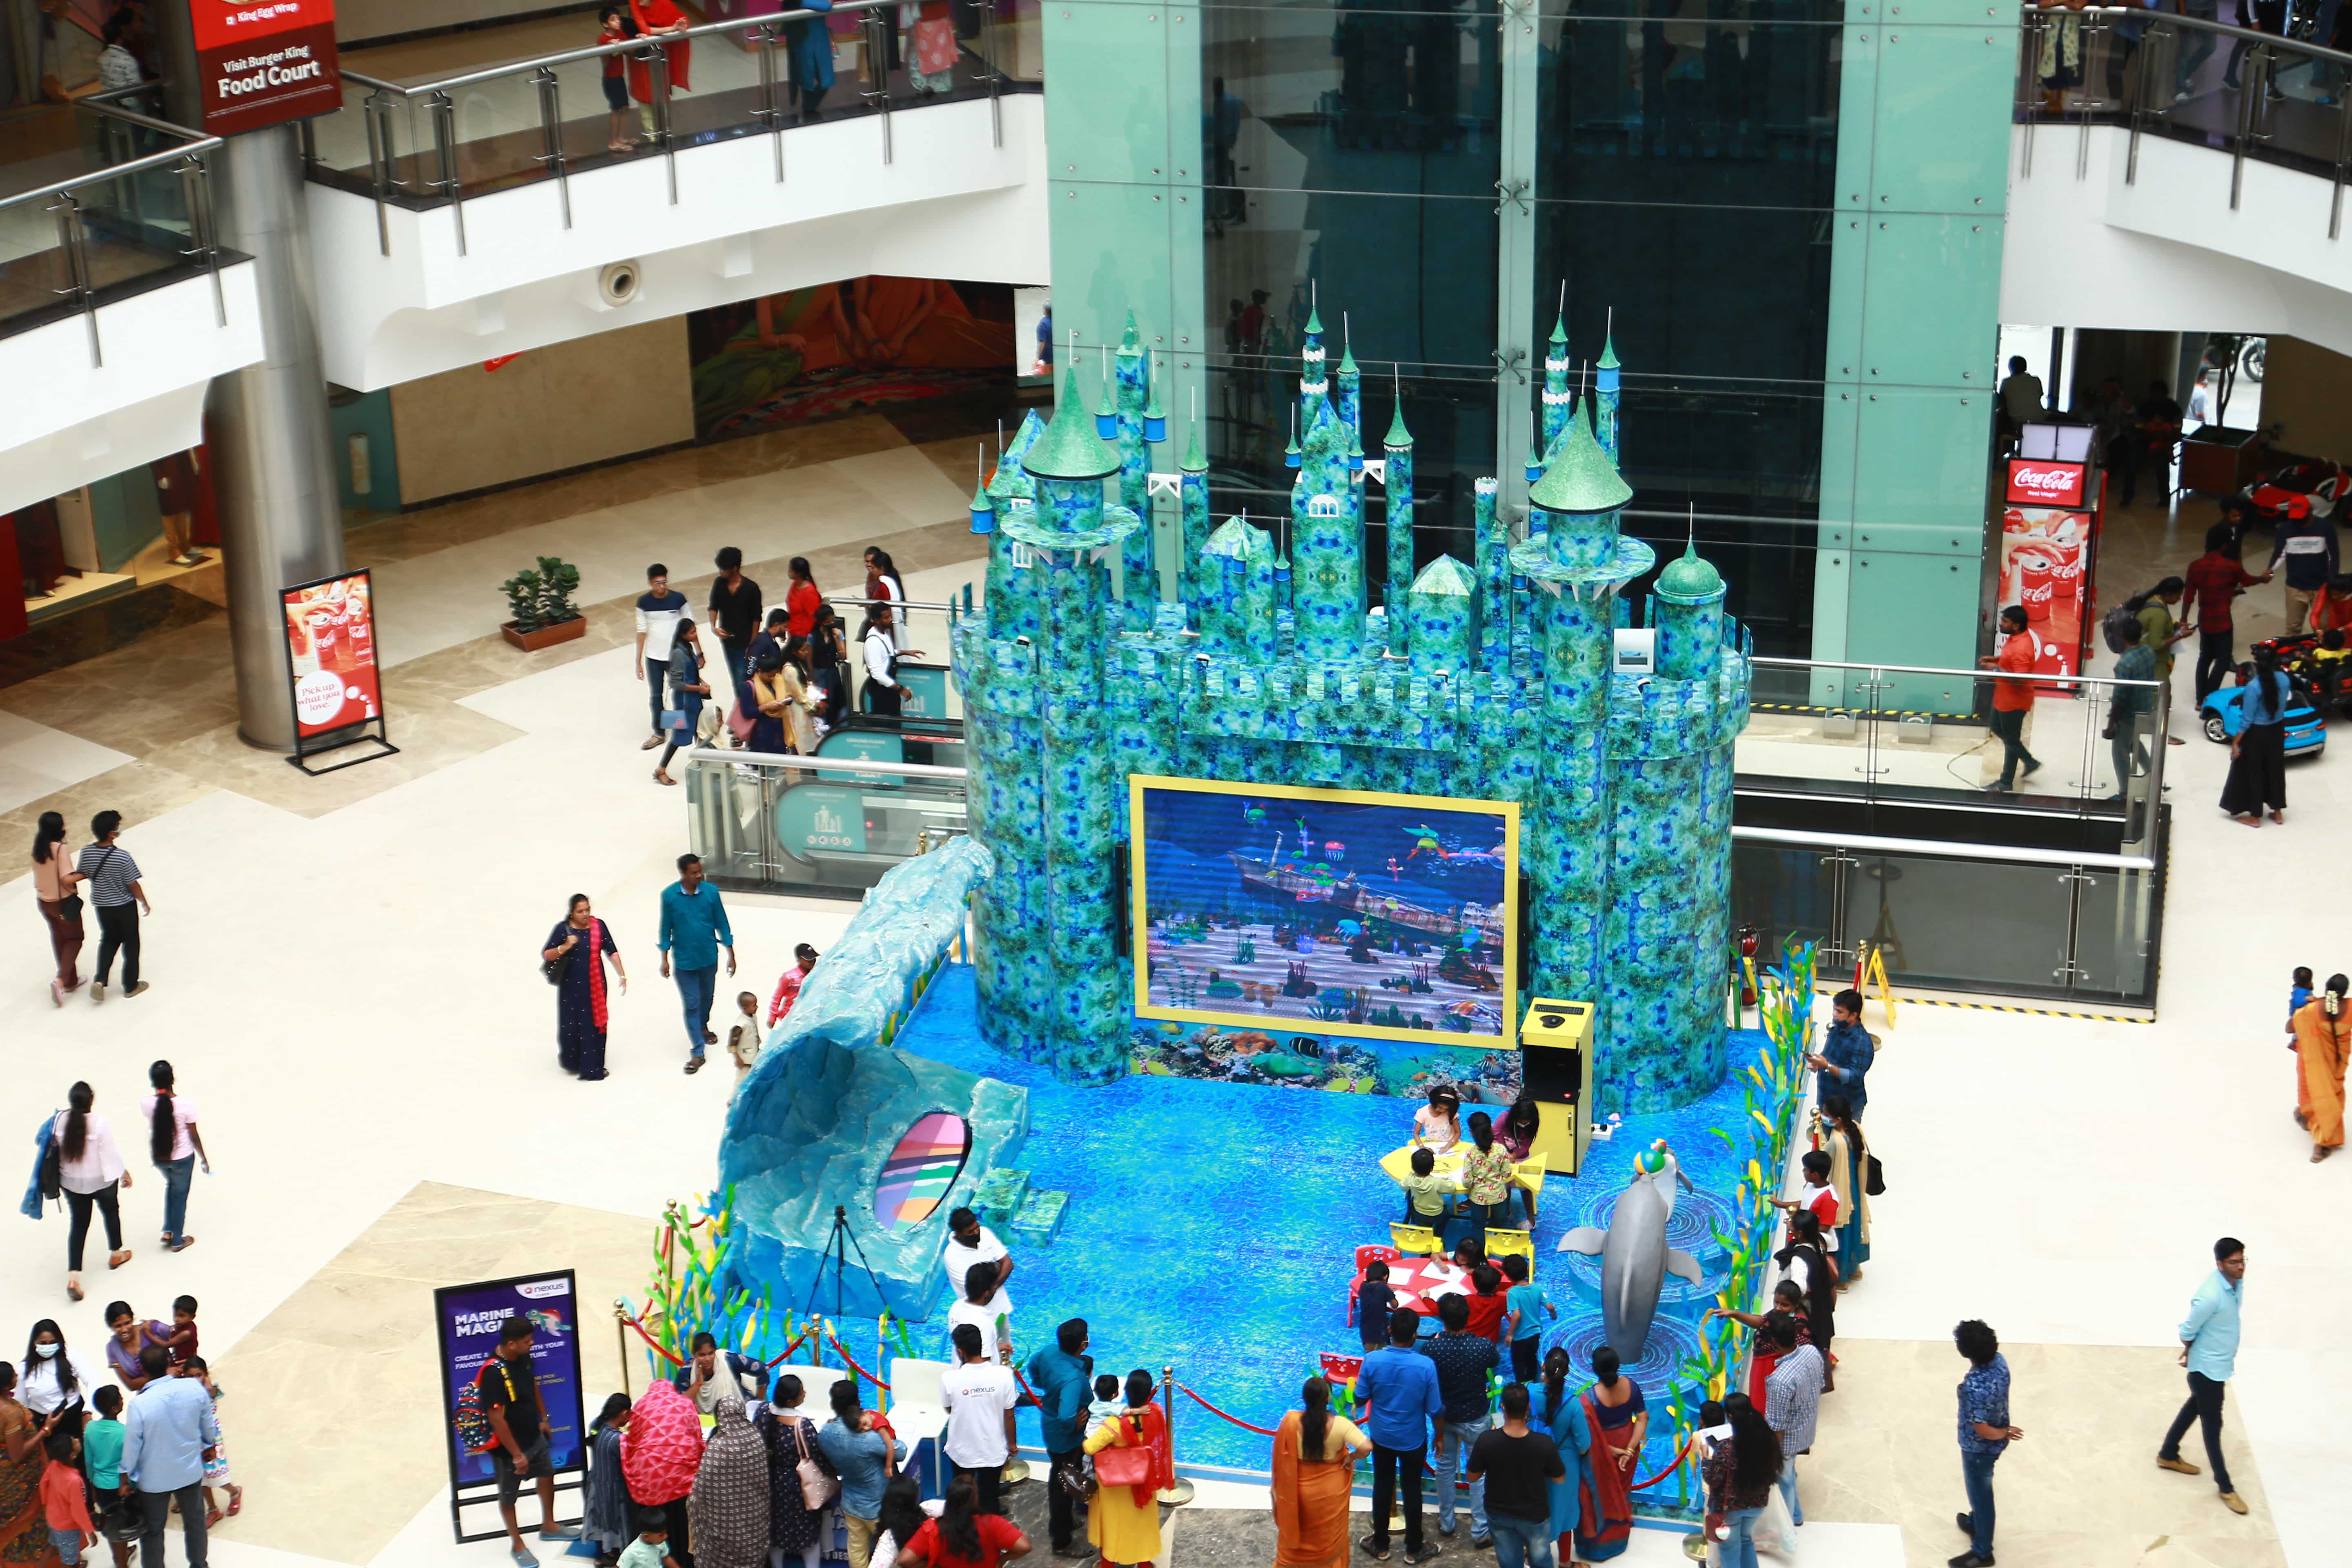 ‘Digital Aquarium’ at Nexus Vijaya Mall, Chennai – An innovative marine themed set up for kids